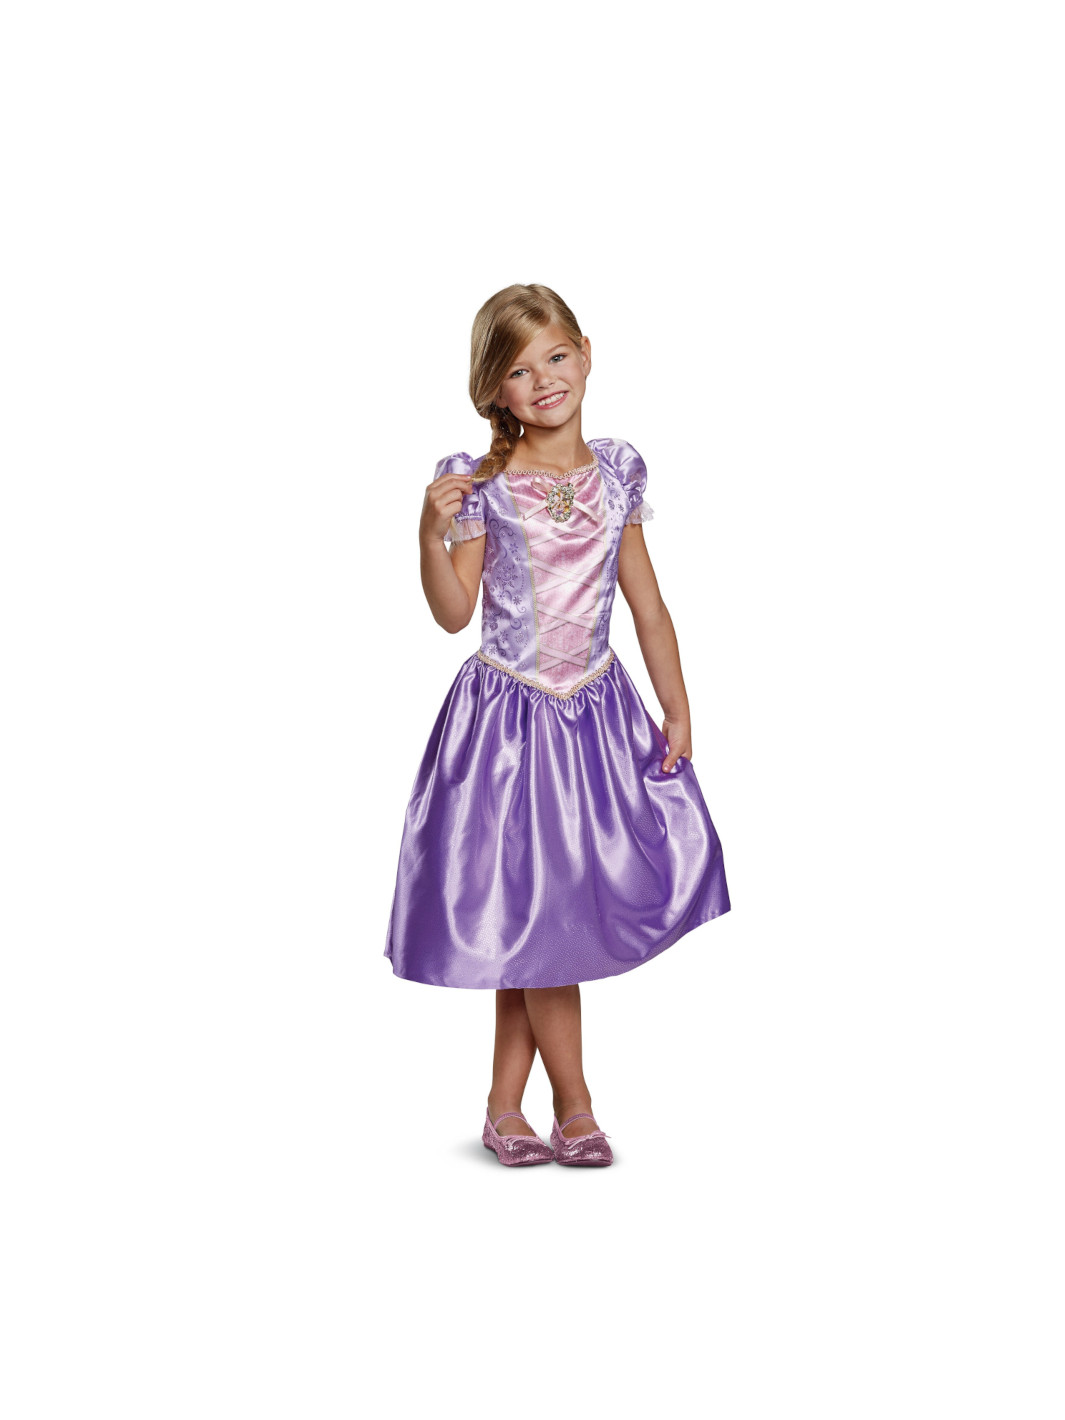 Disney princess dress up, costume di rapunzel classic - Toys Center